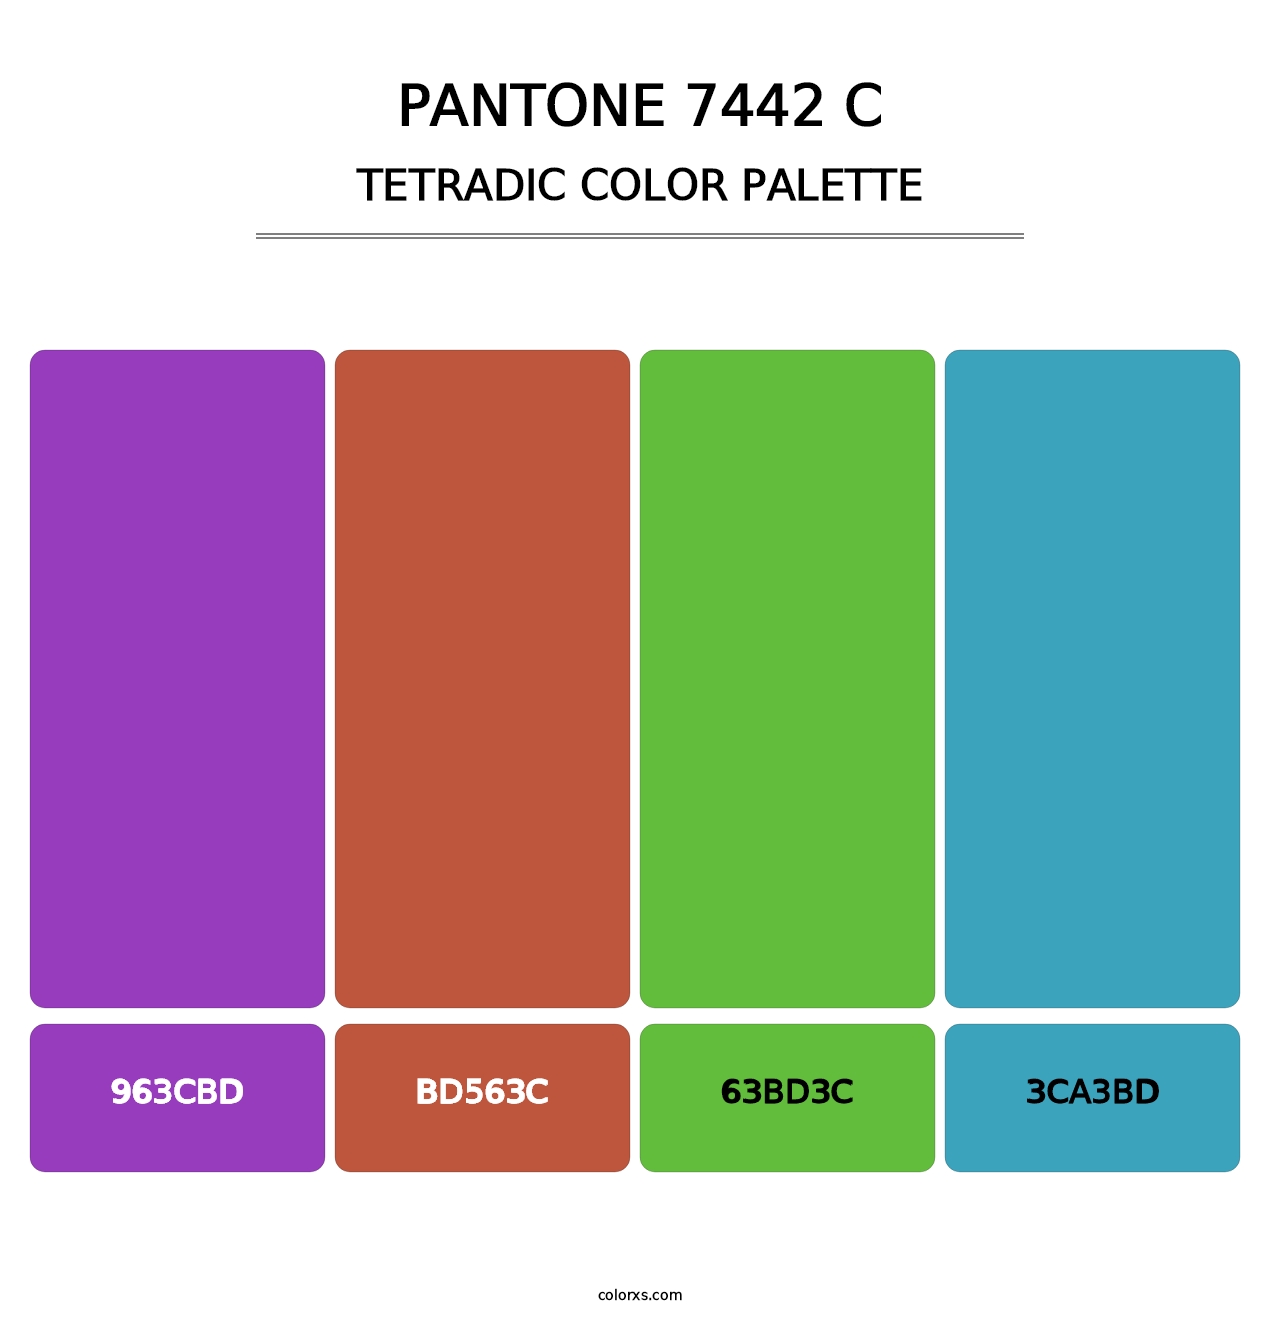 PANTONE 7442 C - Tetradic Color Palette